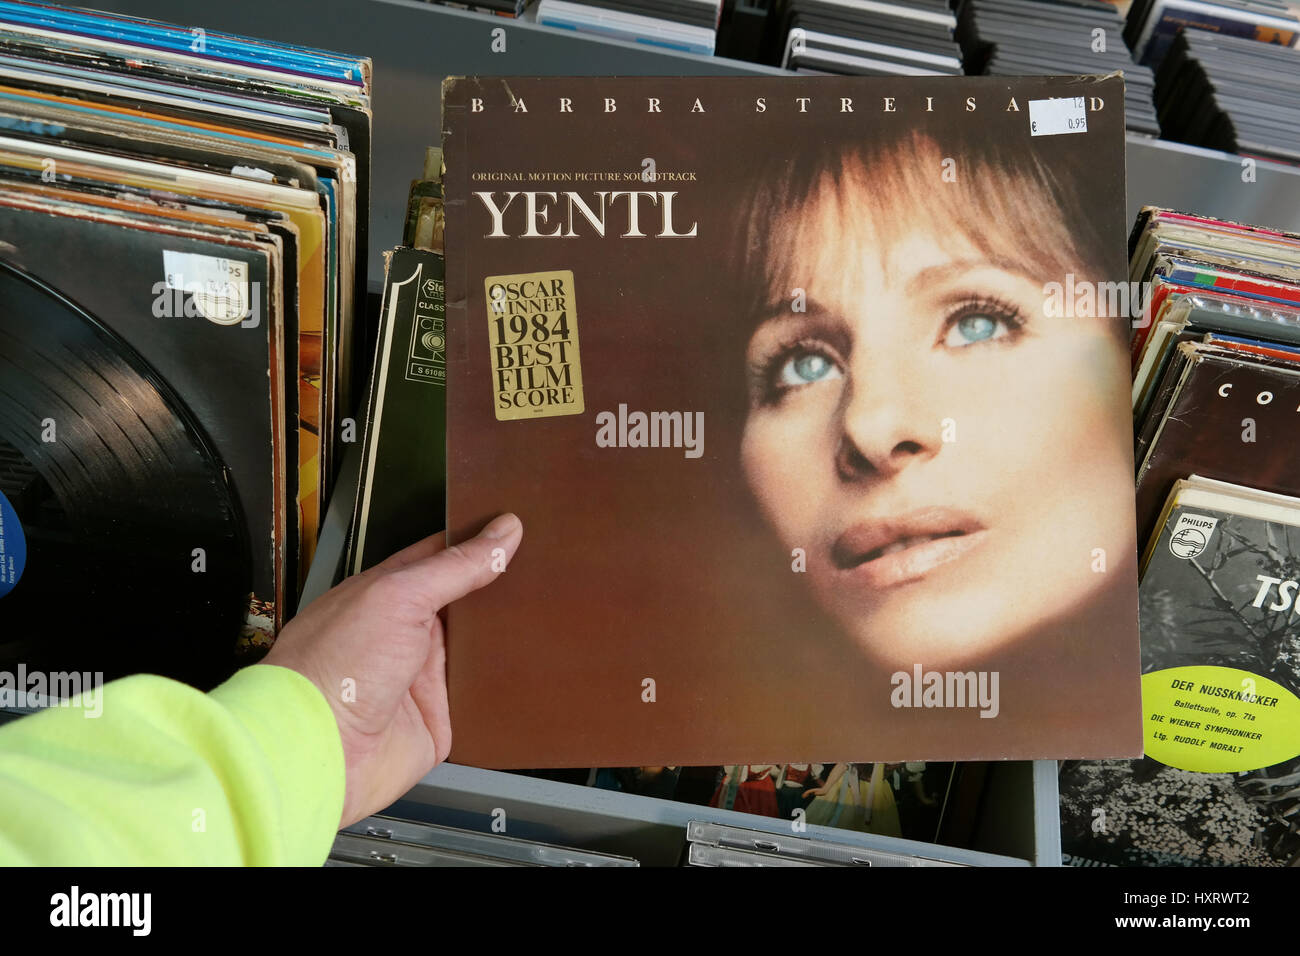 Yentl Soundtrack album by Barbra Streisand Stock Photo